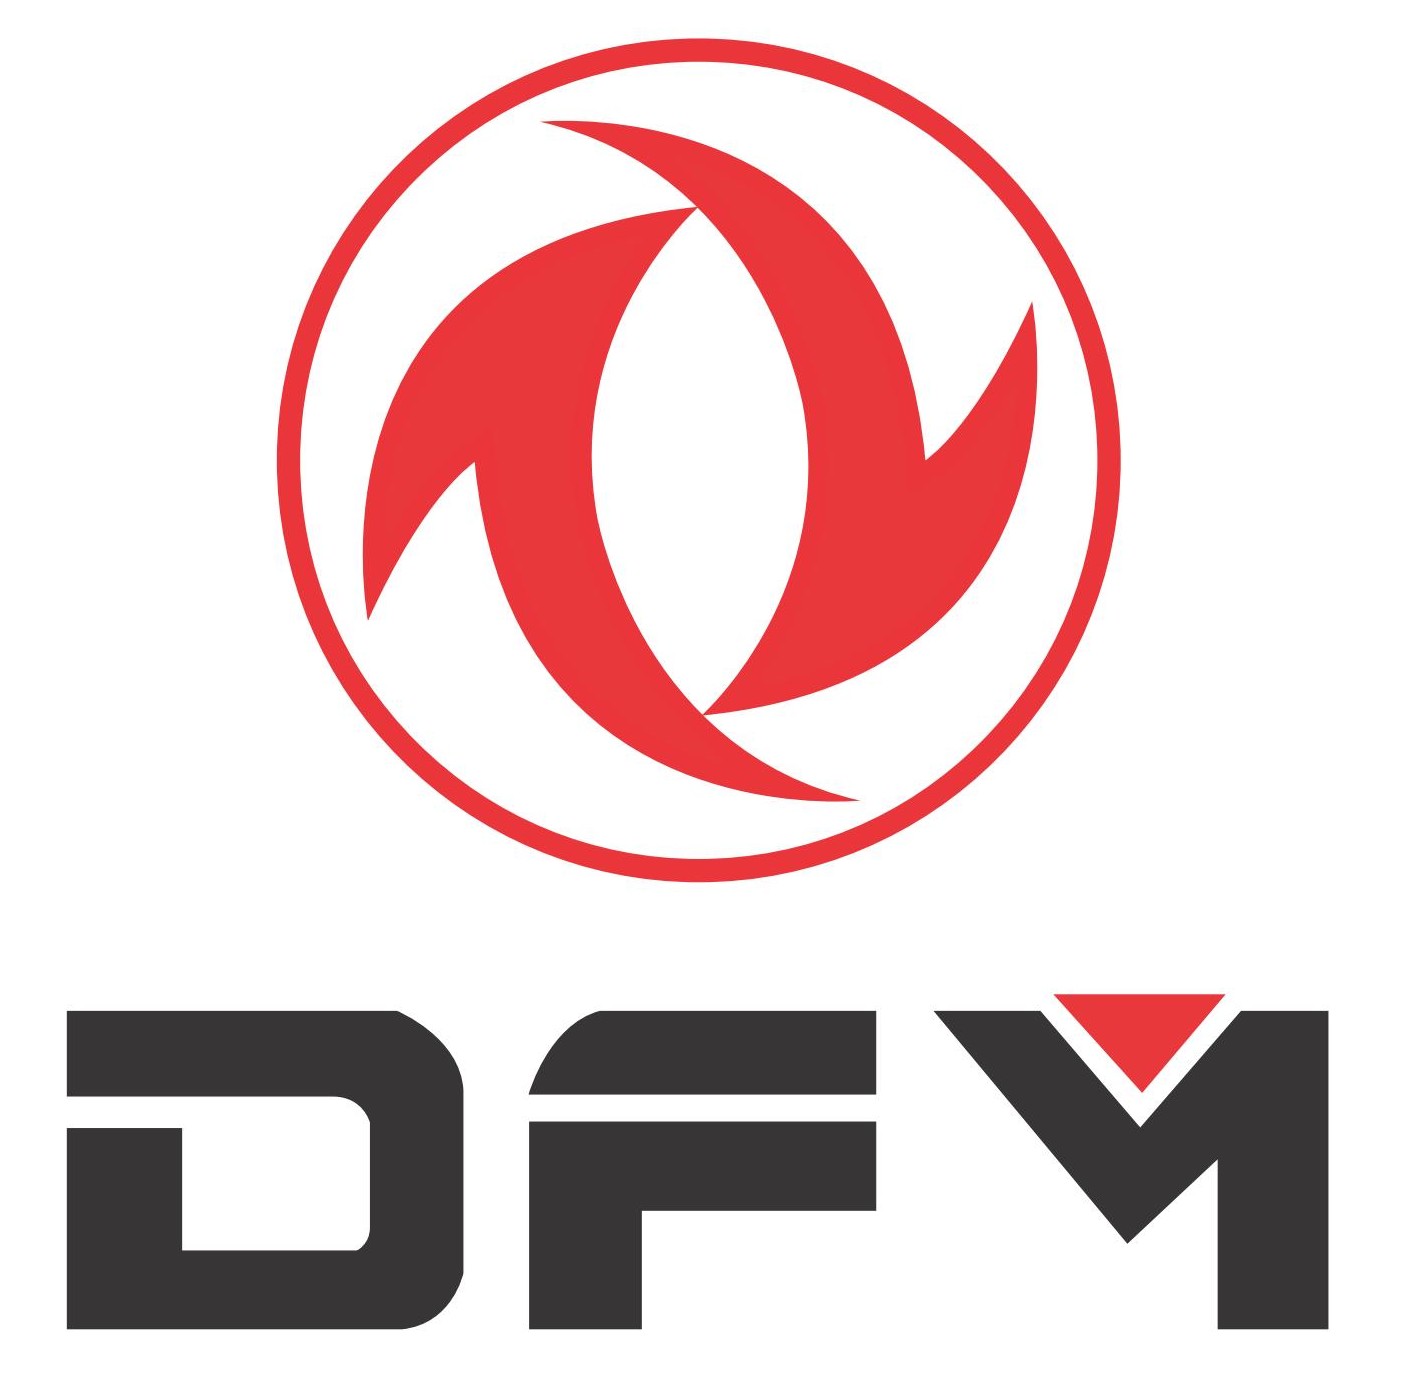 Logo of DongFeng Motor Corpor